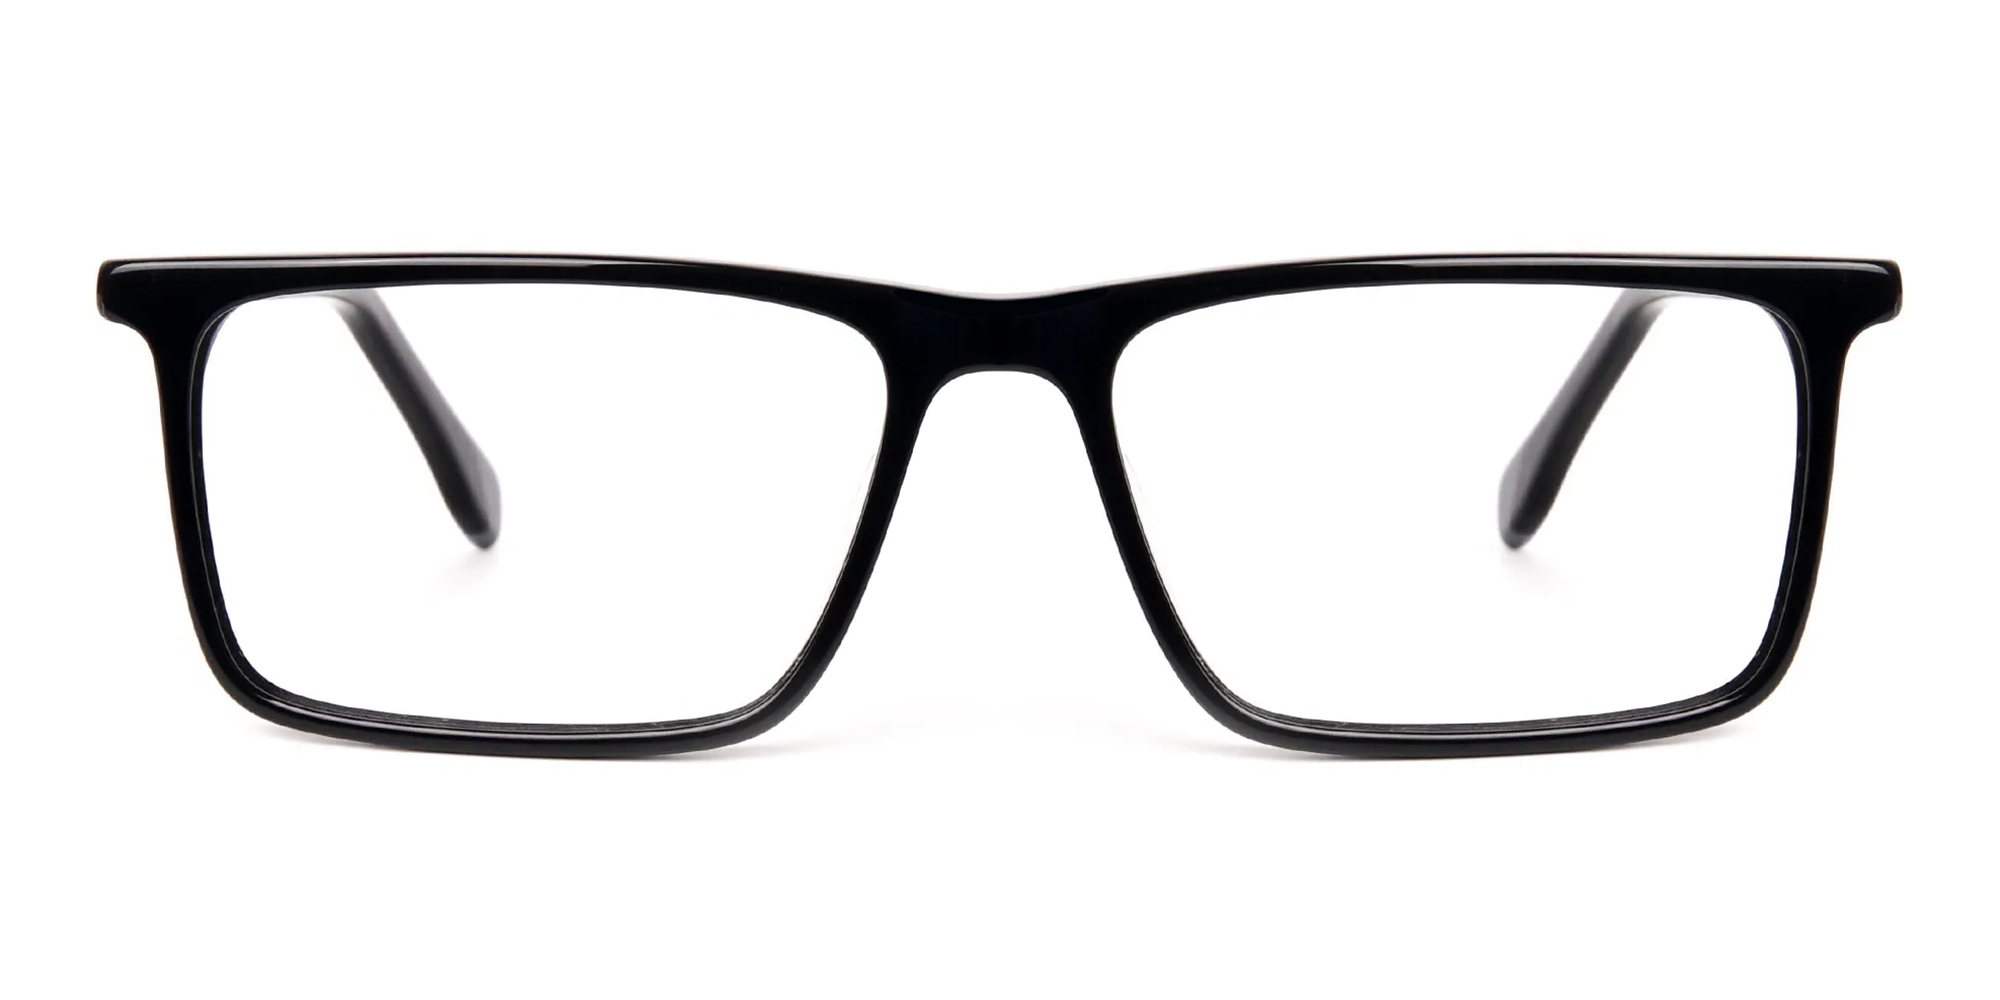 black-and-grey-rectangular-glasses-frames-1